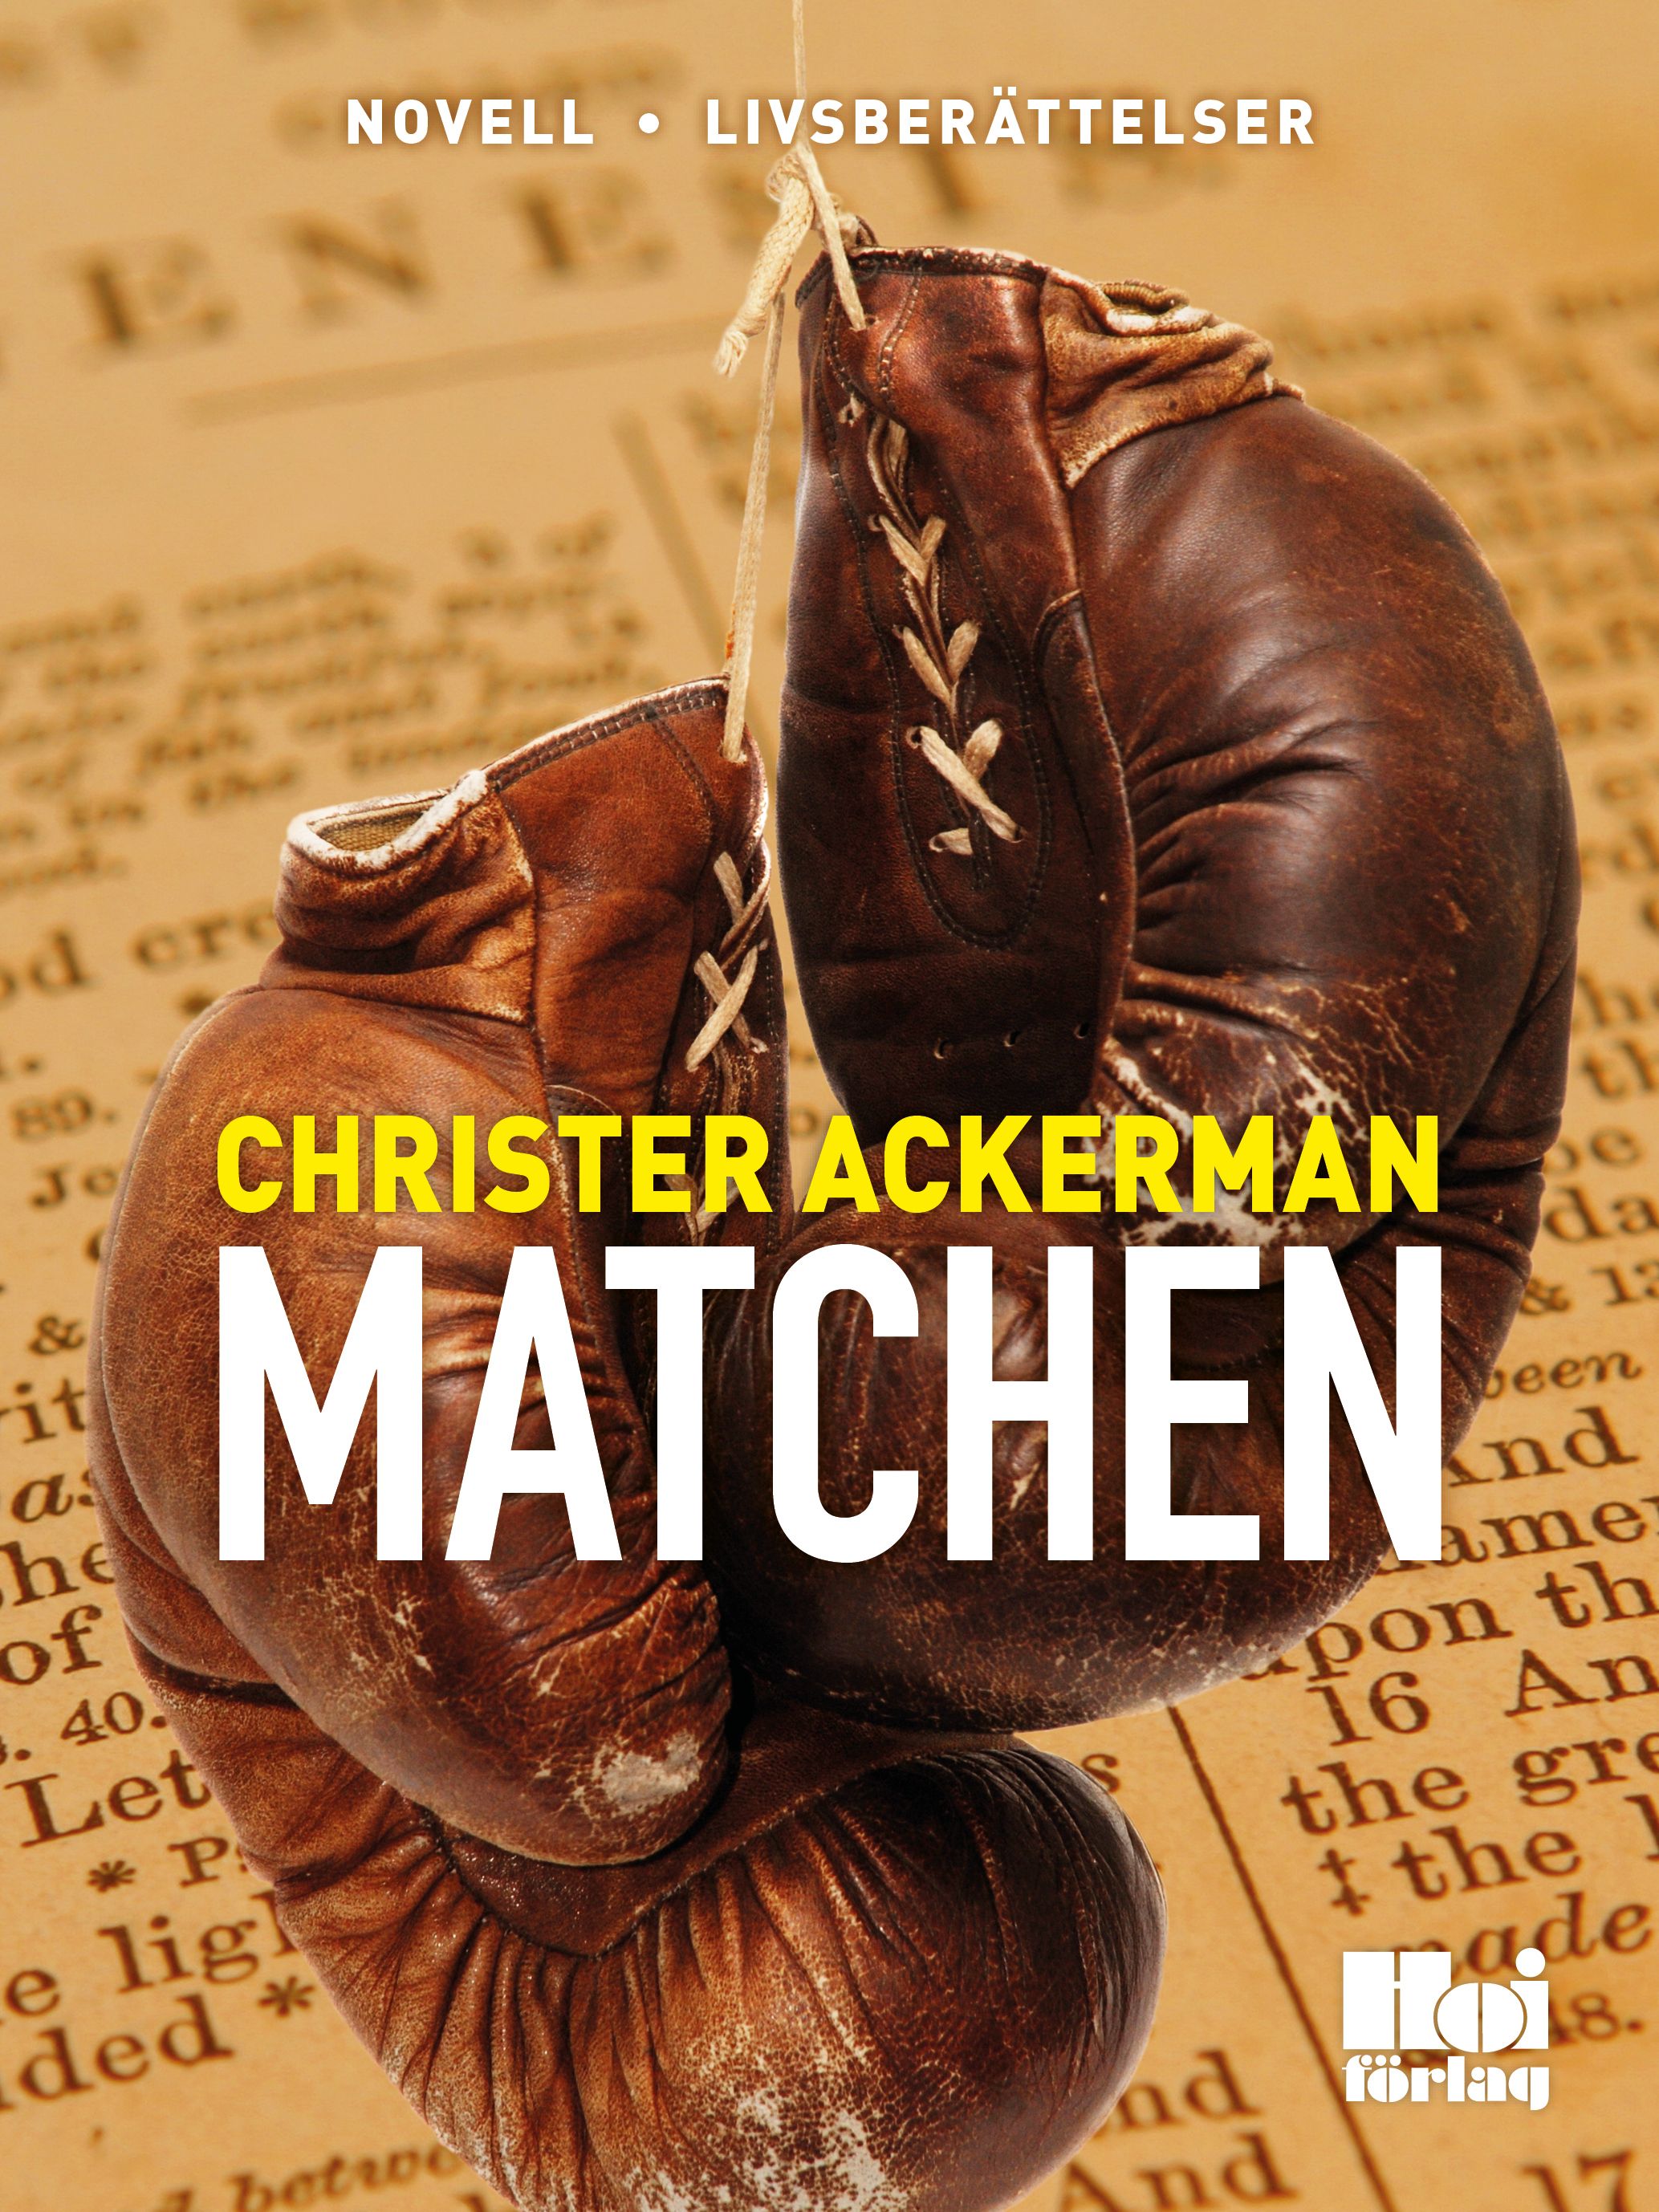 Matchen, eBook by Christer Ackerman